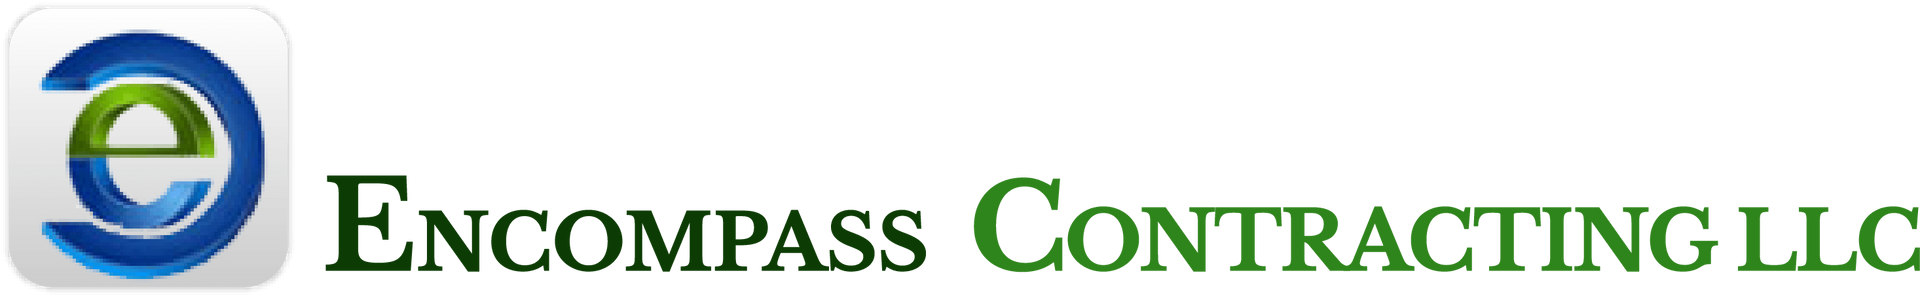 Encompass Contracting LLC Logo 